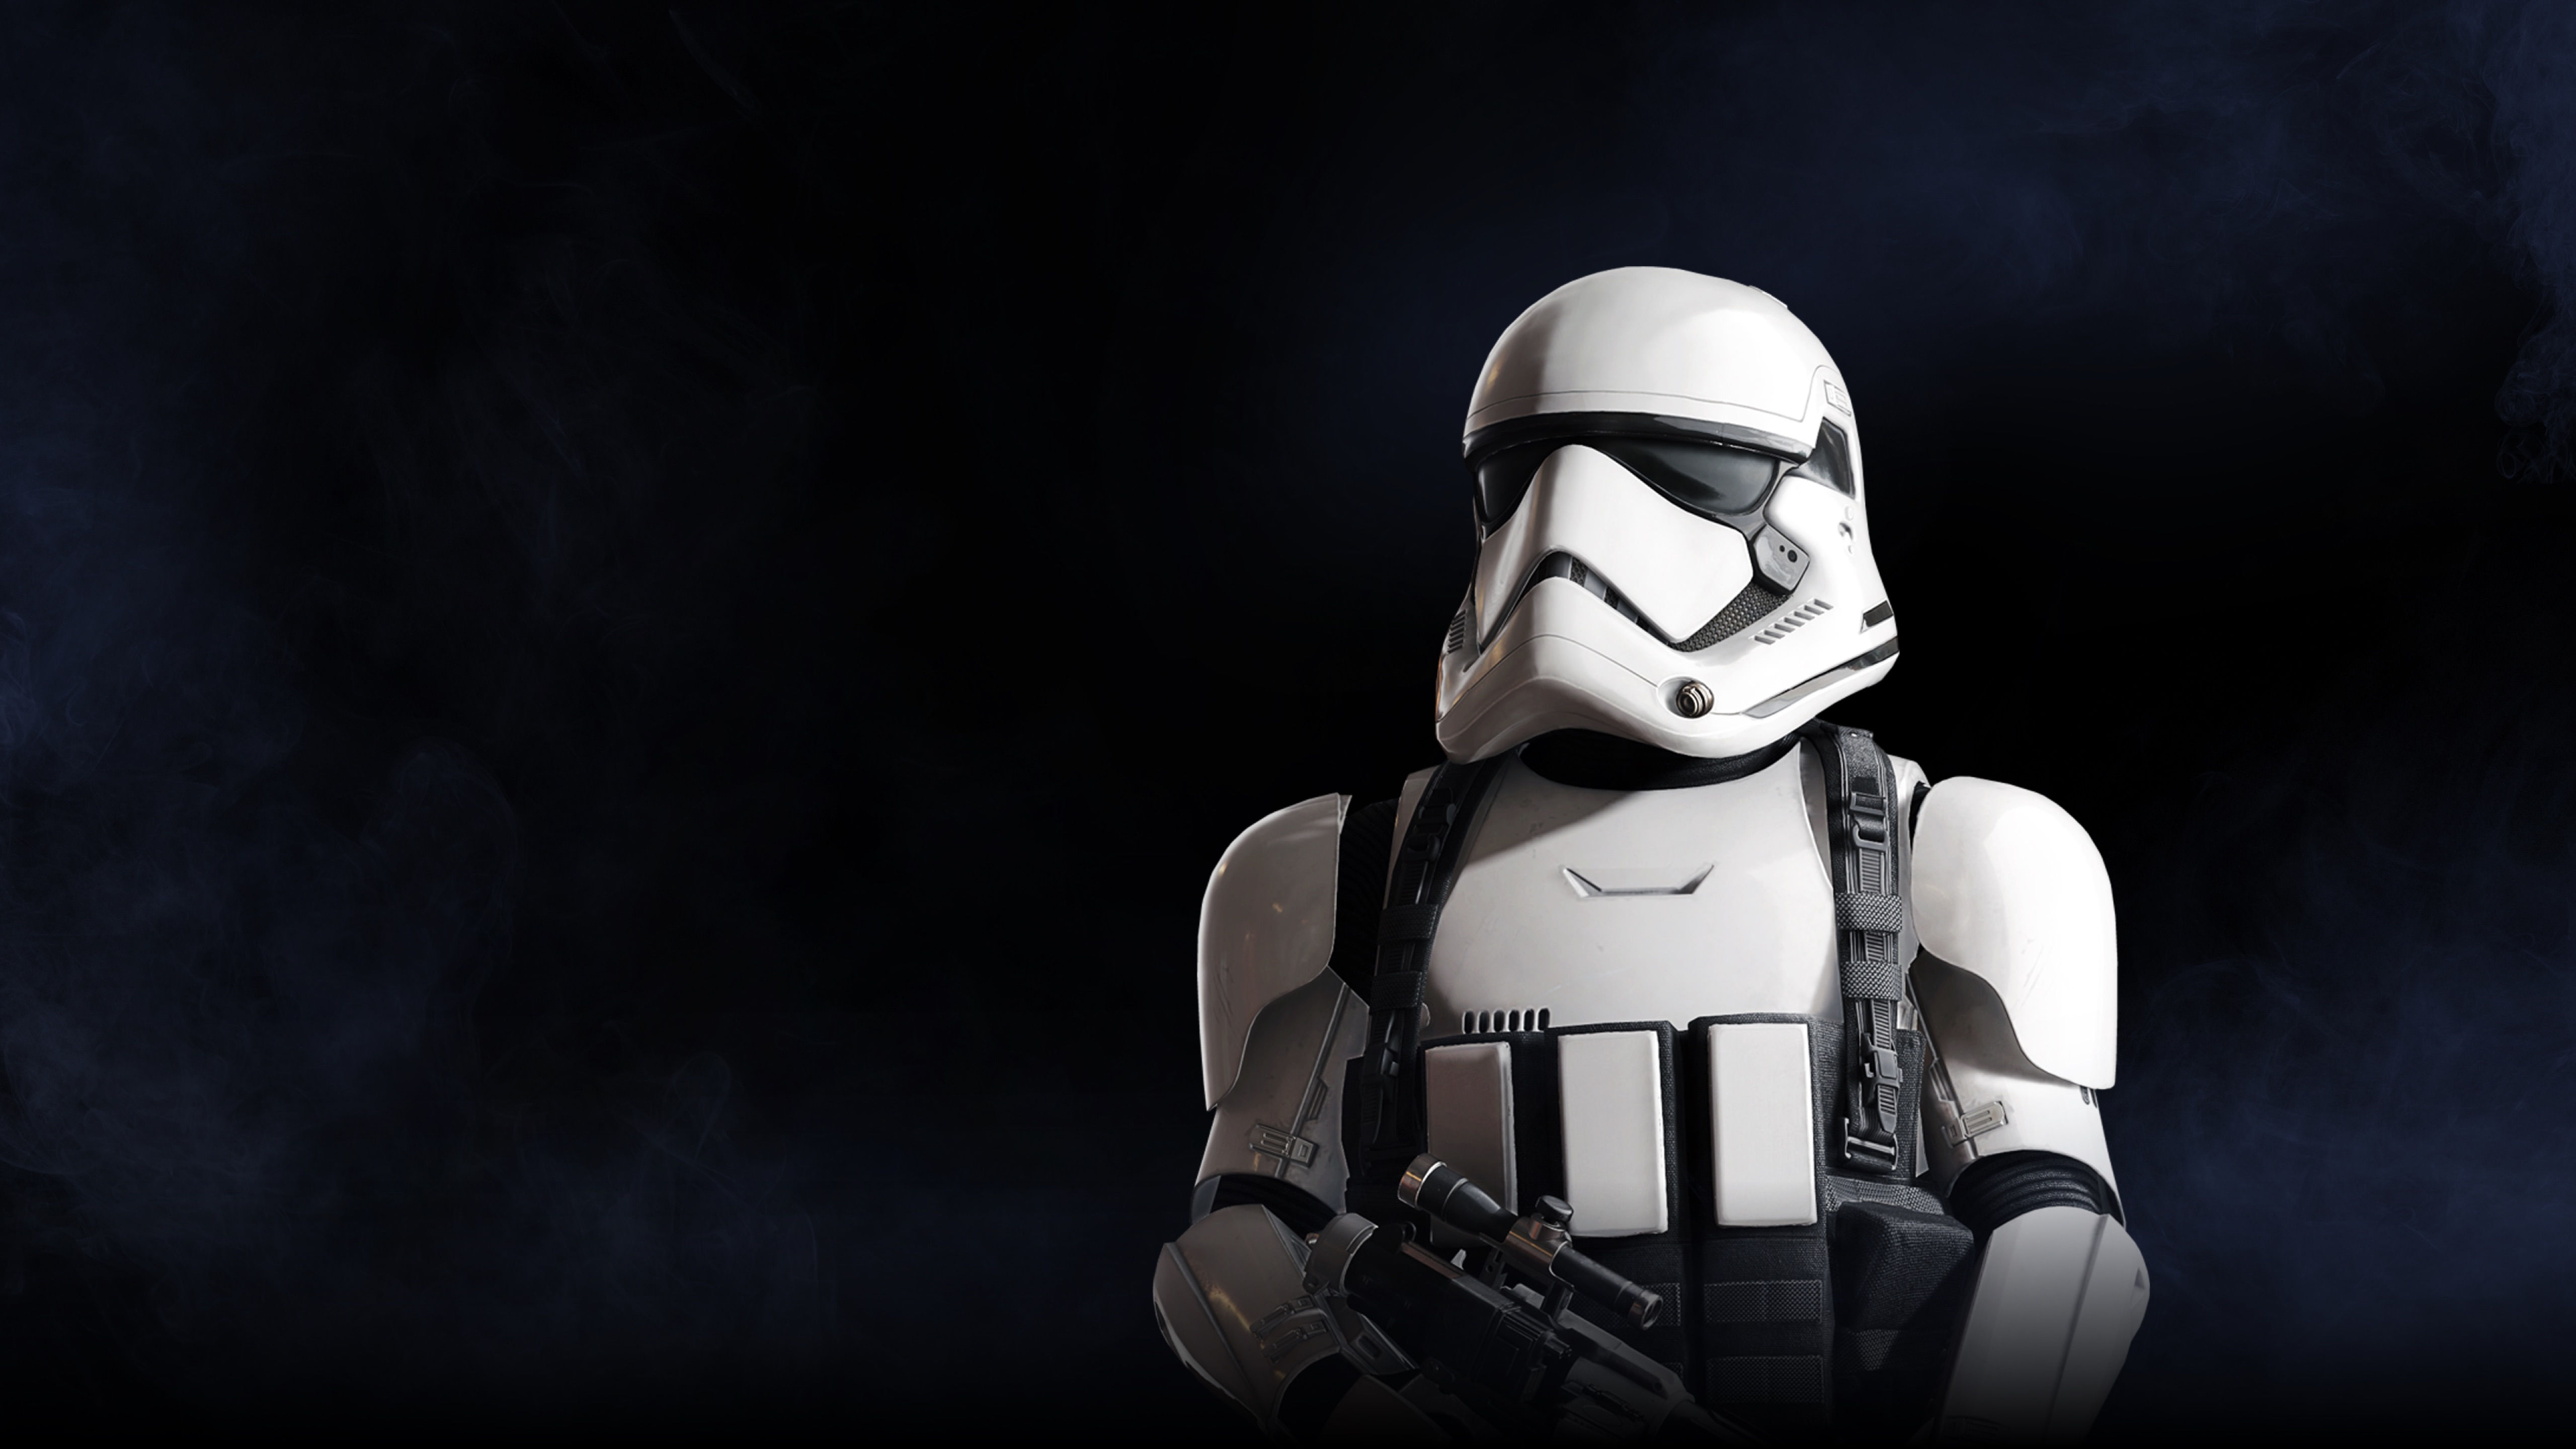 stormtrooper wallpaper,fictional character,helmet,personal protective equipment,space,action figure